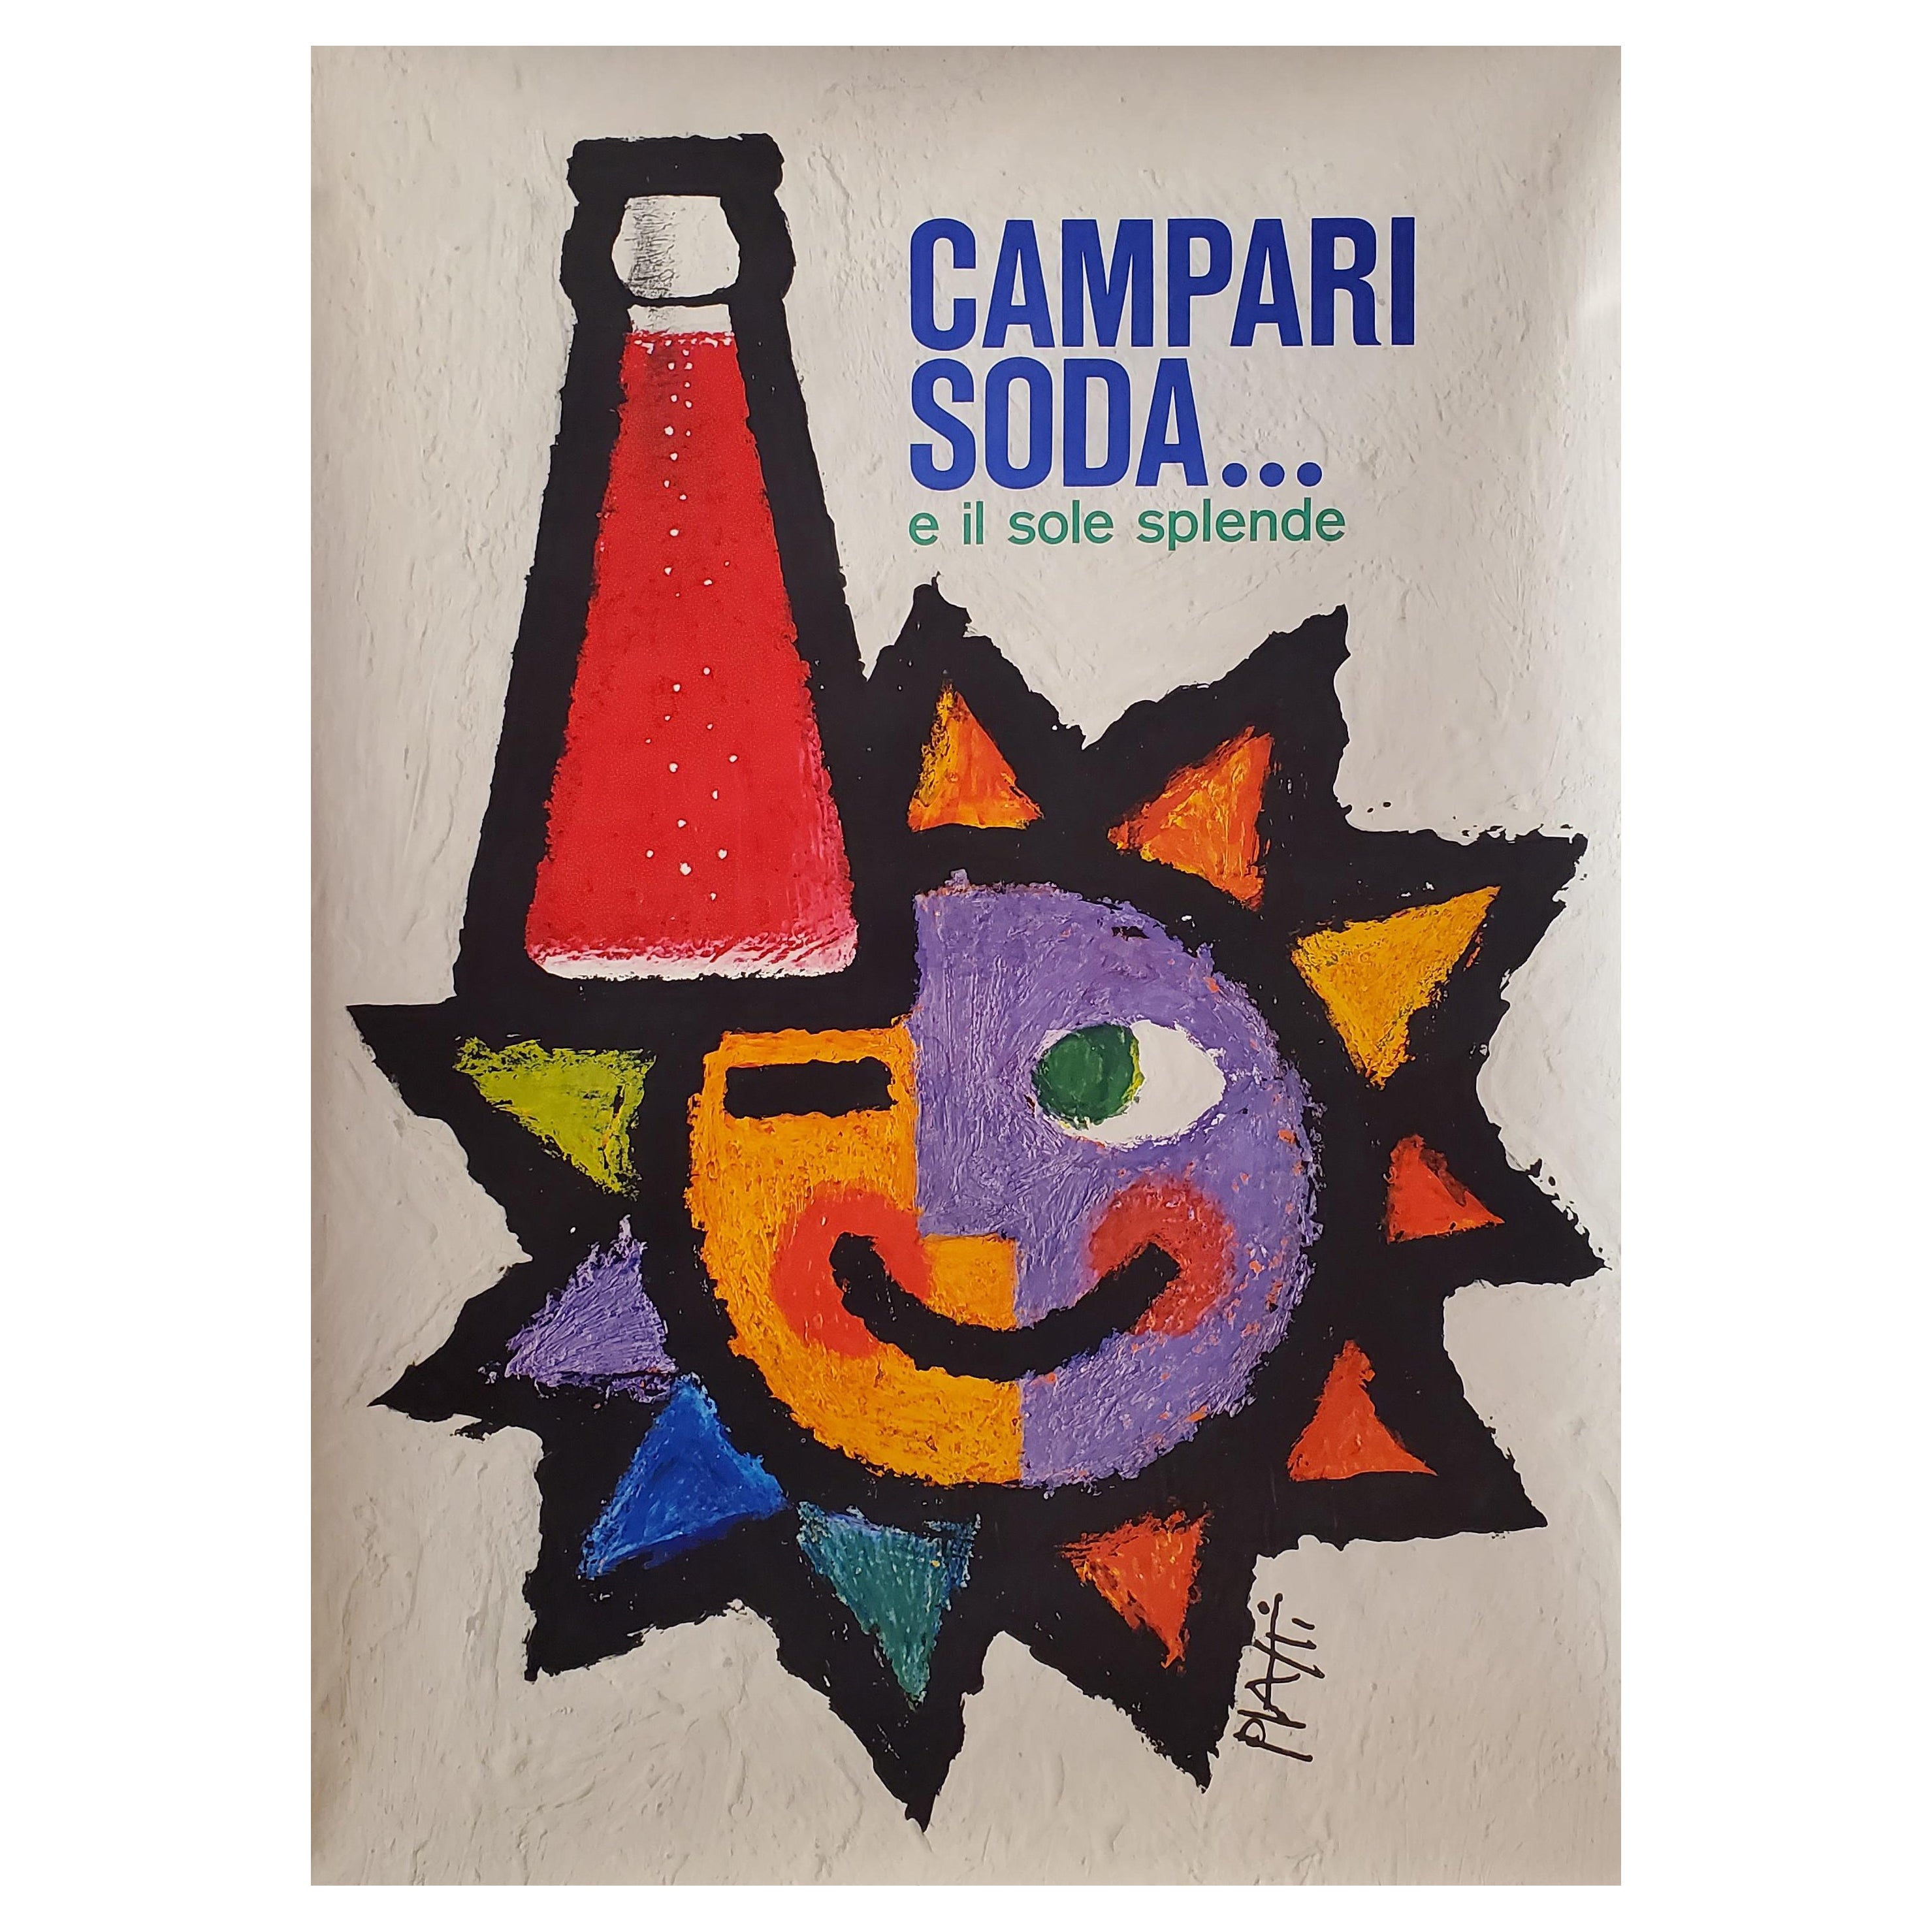 Original Campari Soda Poster, by Piatti 1950